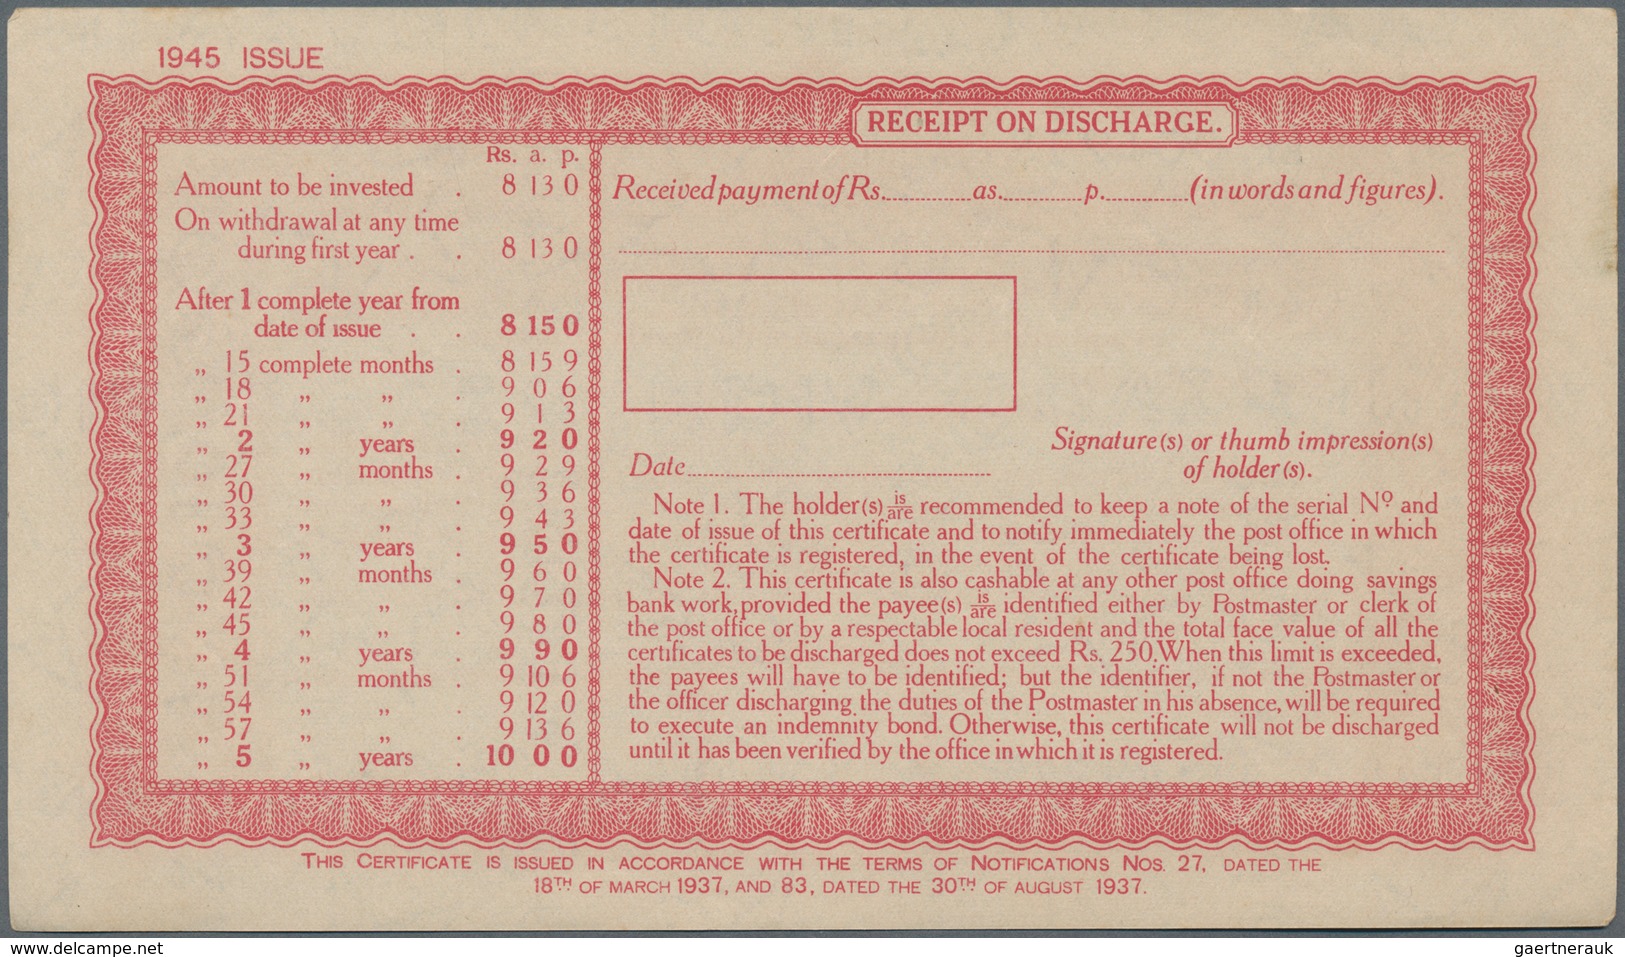 Burma / Myanmar / Birma: Set with 10 pcs. 10 Rupees Post Office 5-Year Cash Certificate, series 1945